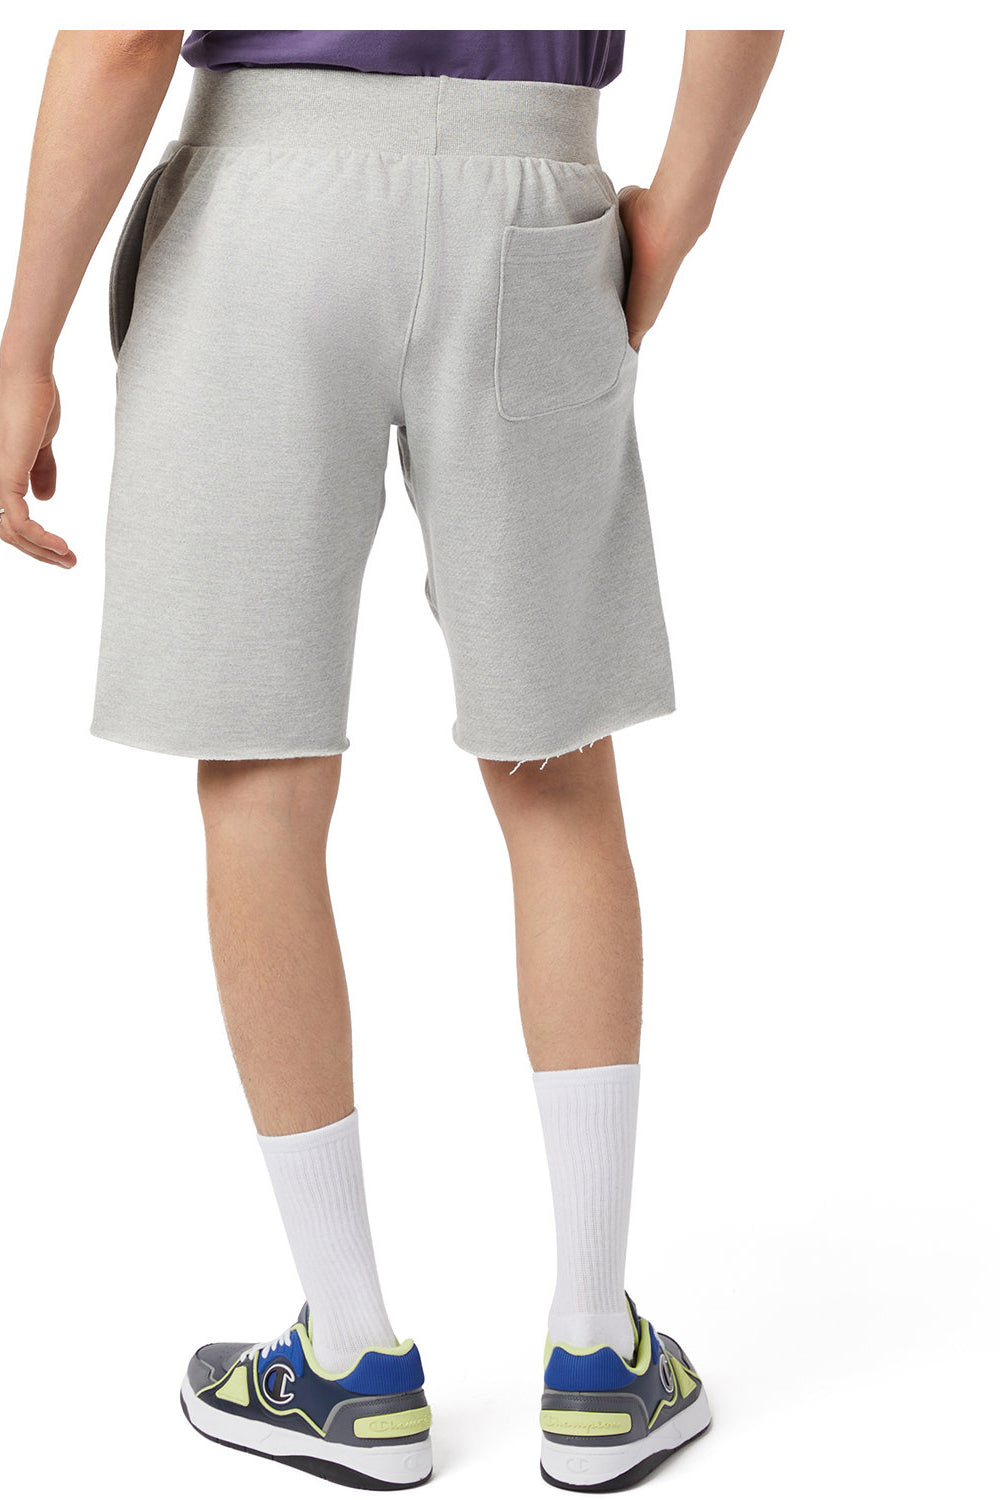 Champion 8180 Mens Shorts w/ Pockets Oxford Grey Model Back